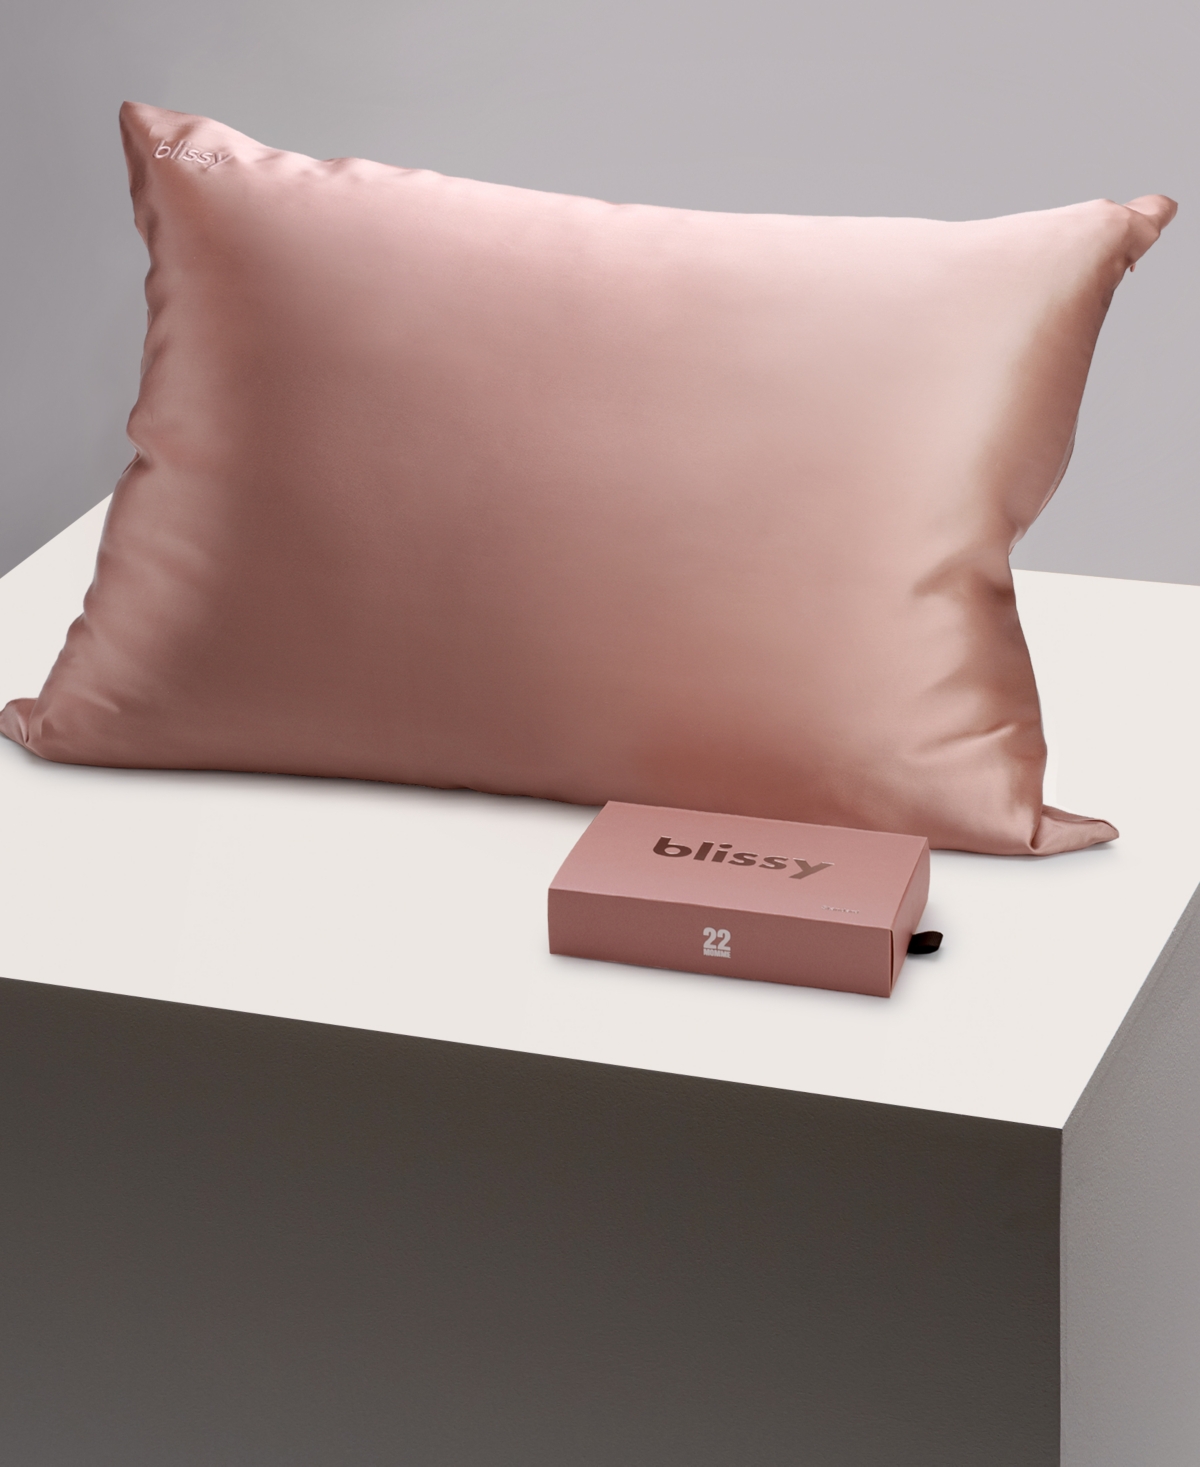 Blissy 22-momme Silk Pillowcase, Standard In Rose Gold-tone